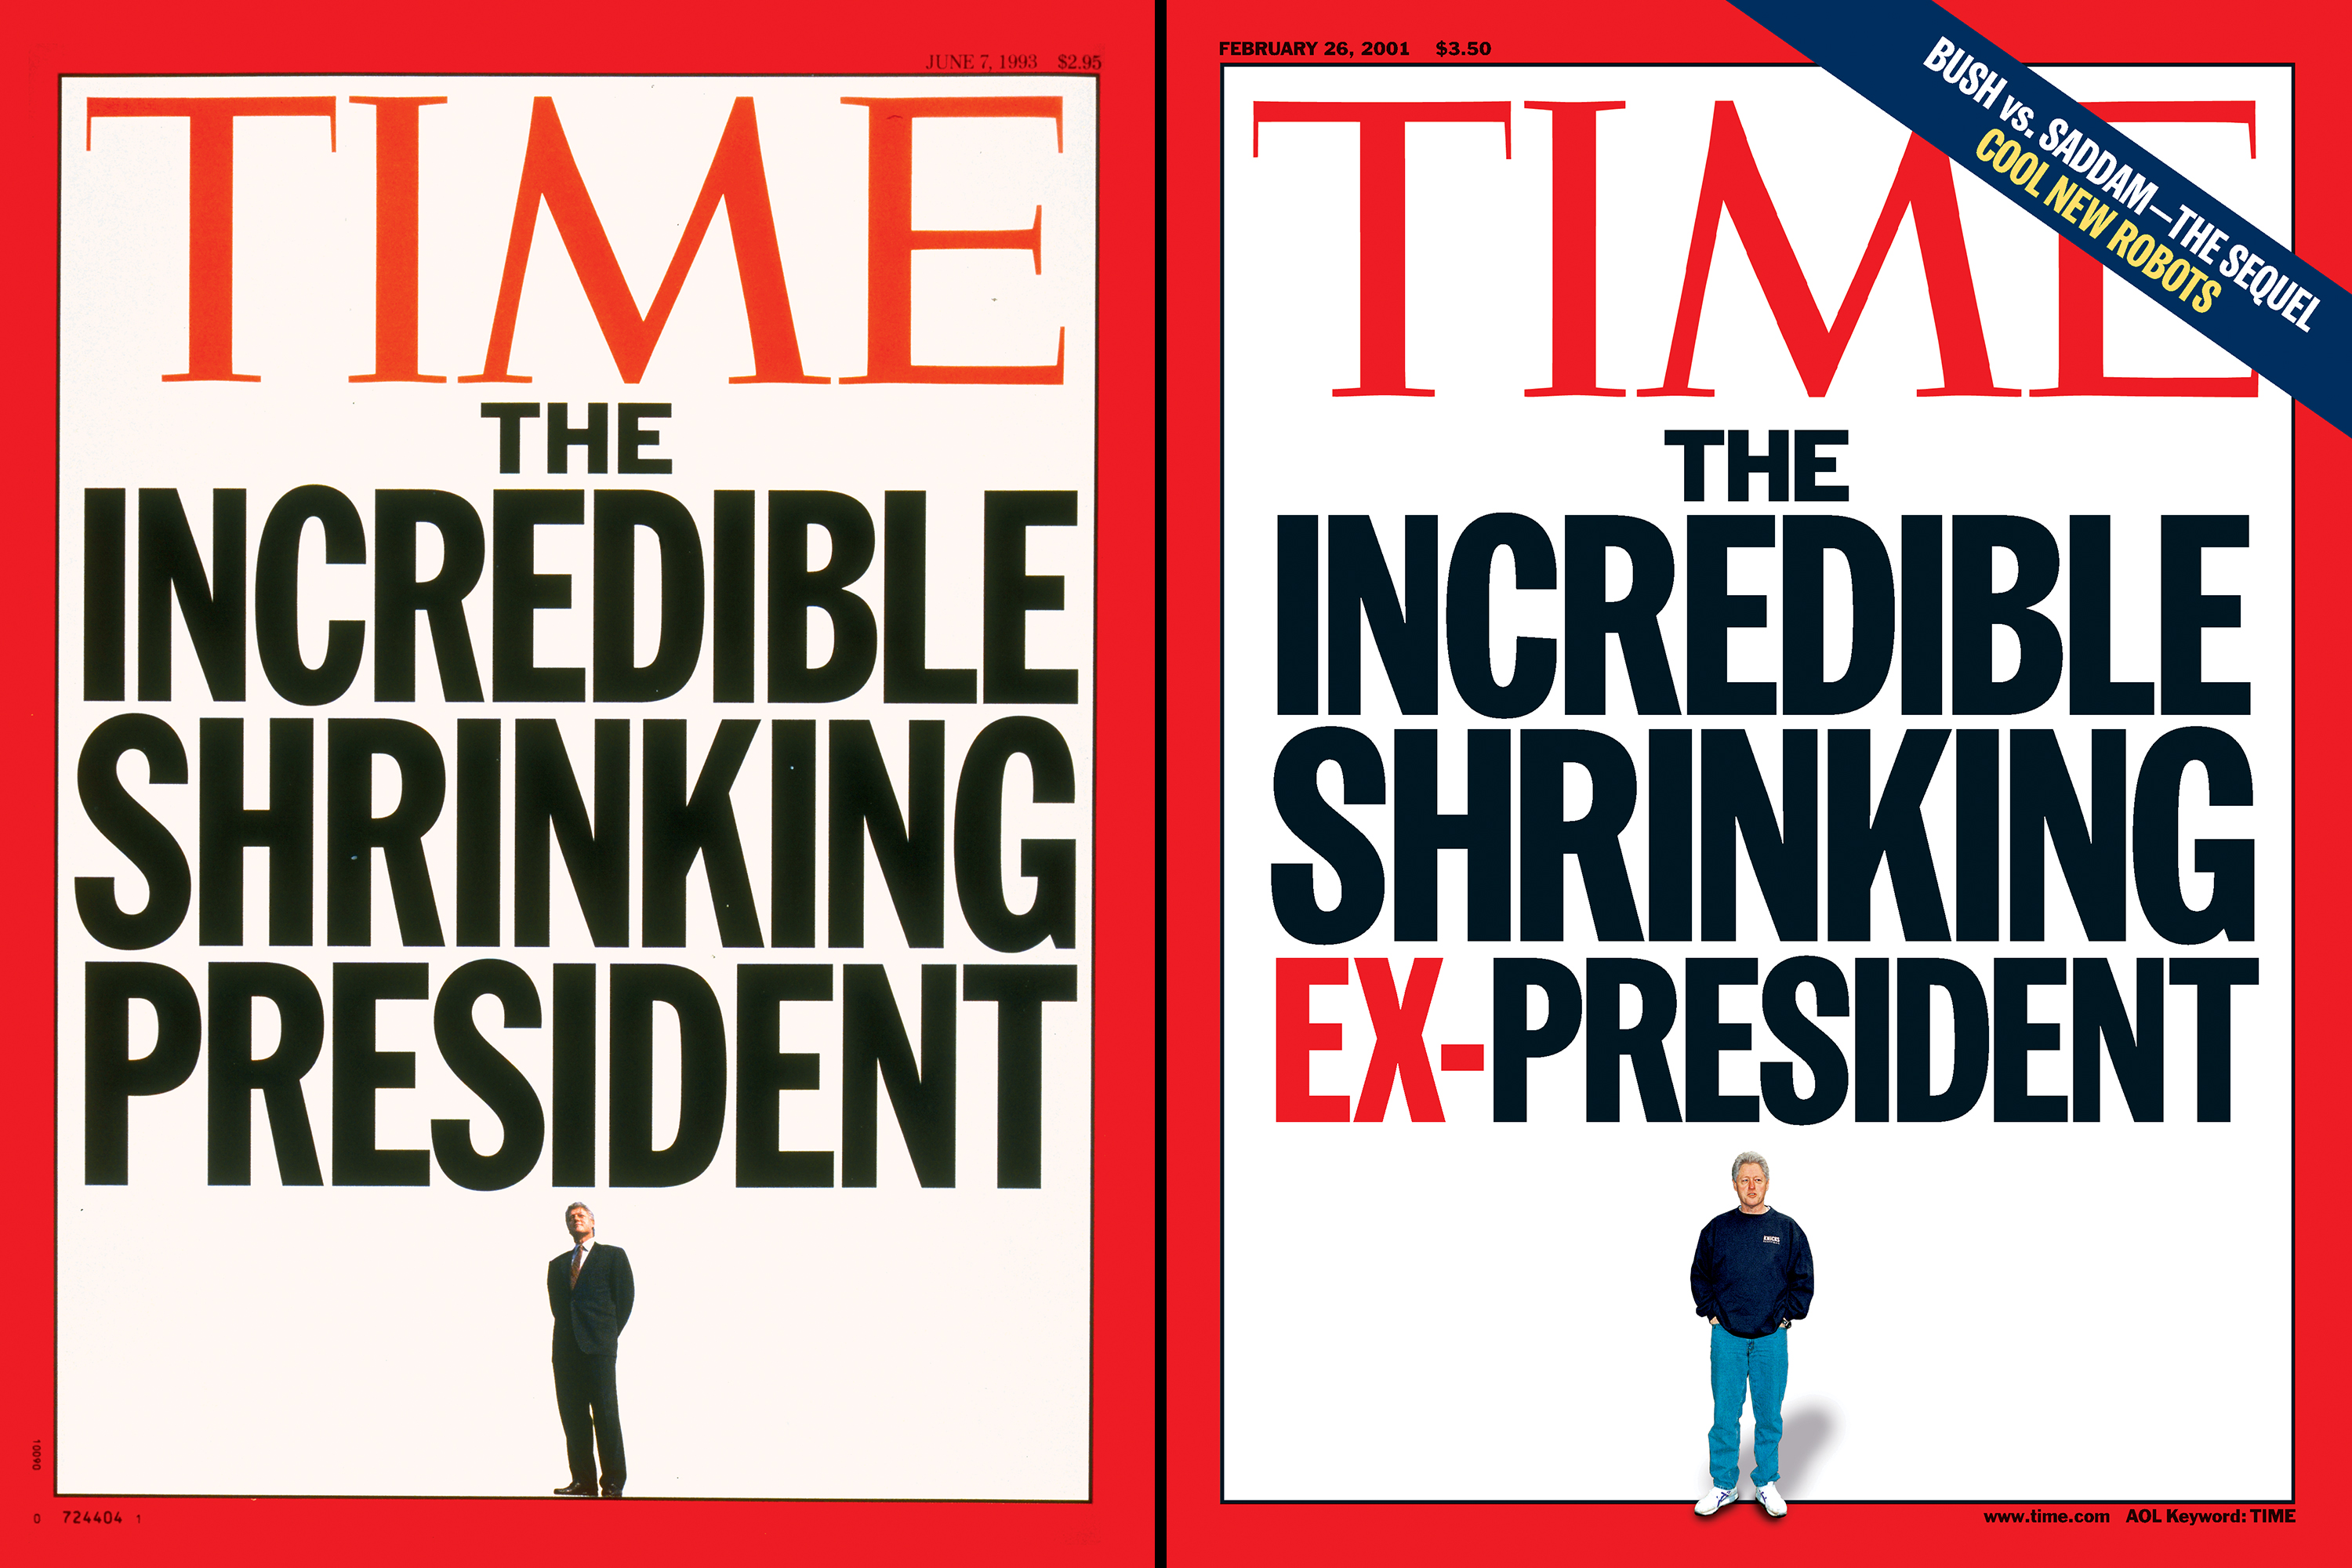 The Incredible Shrinking President," June 7, 1993; "The Incredible Shrinking Ex-President," Feb. 26, 2001 (Photographs: Steve Liss for TIME; Brigitte Stelzer-Gamma, ")